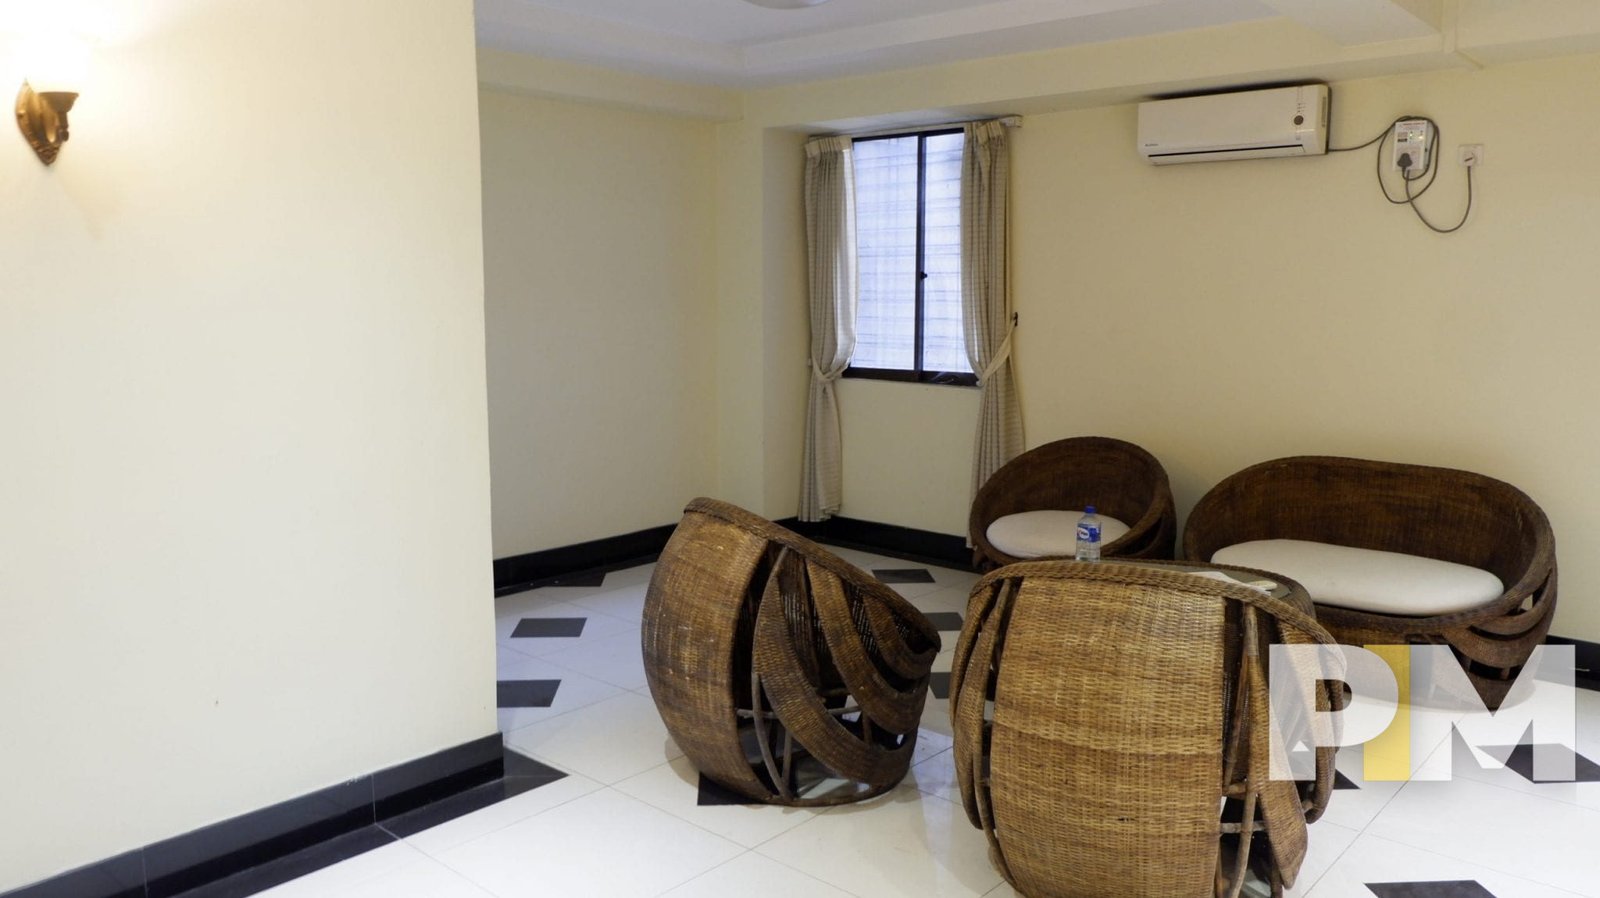 living room with rattan furniture set - Myanmar Property